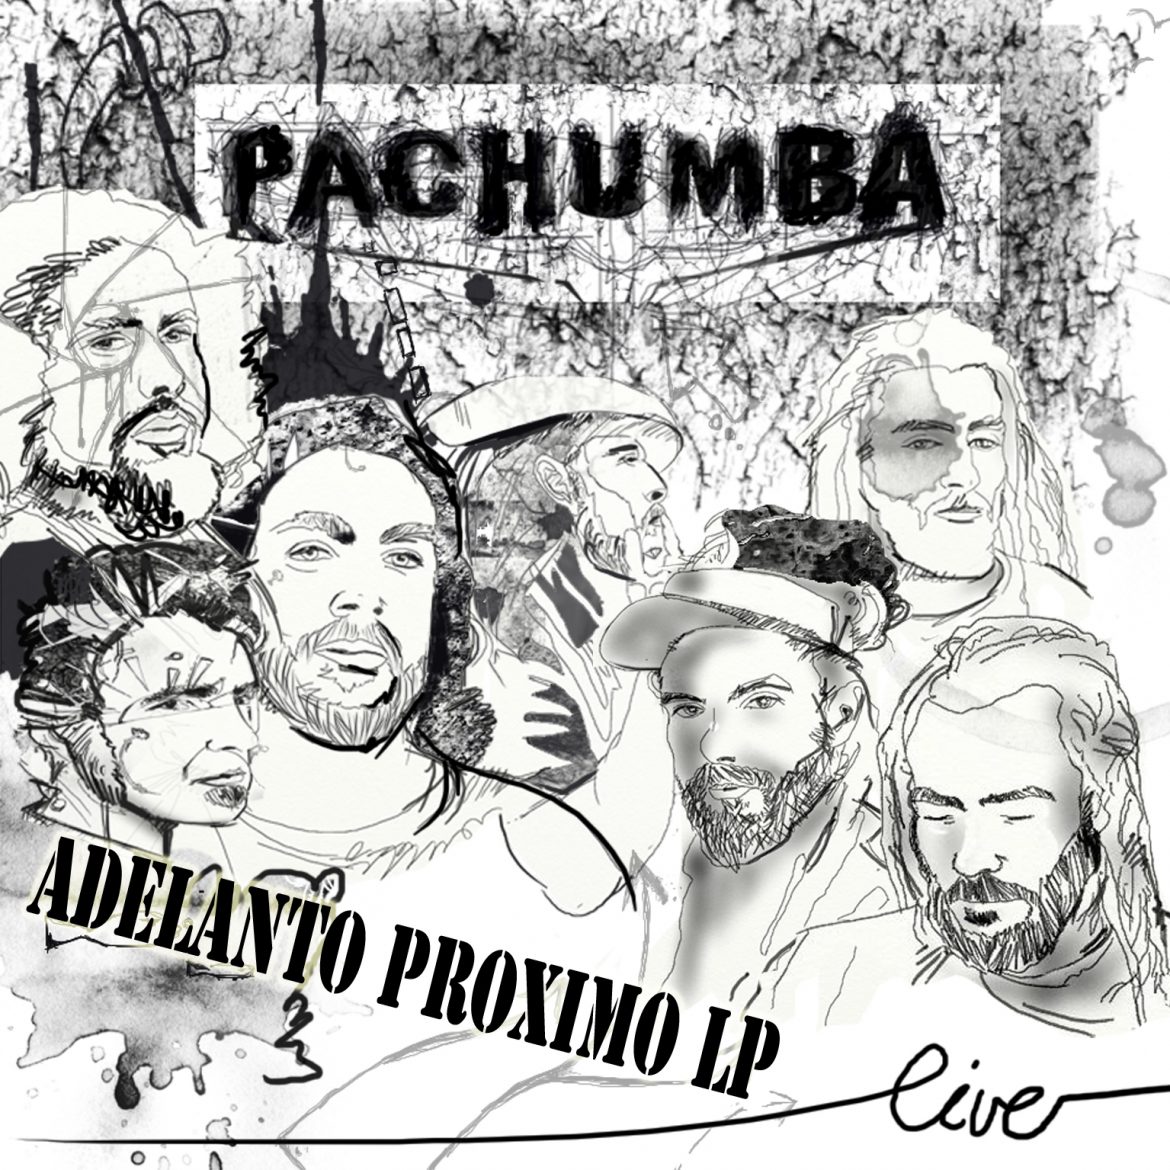 Pachumba, Live, Reggae canario